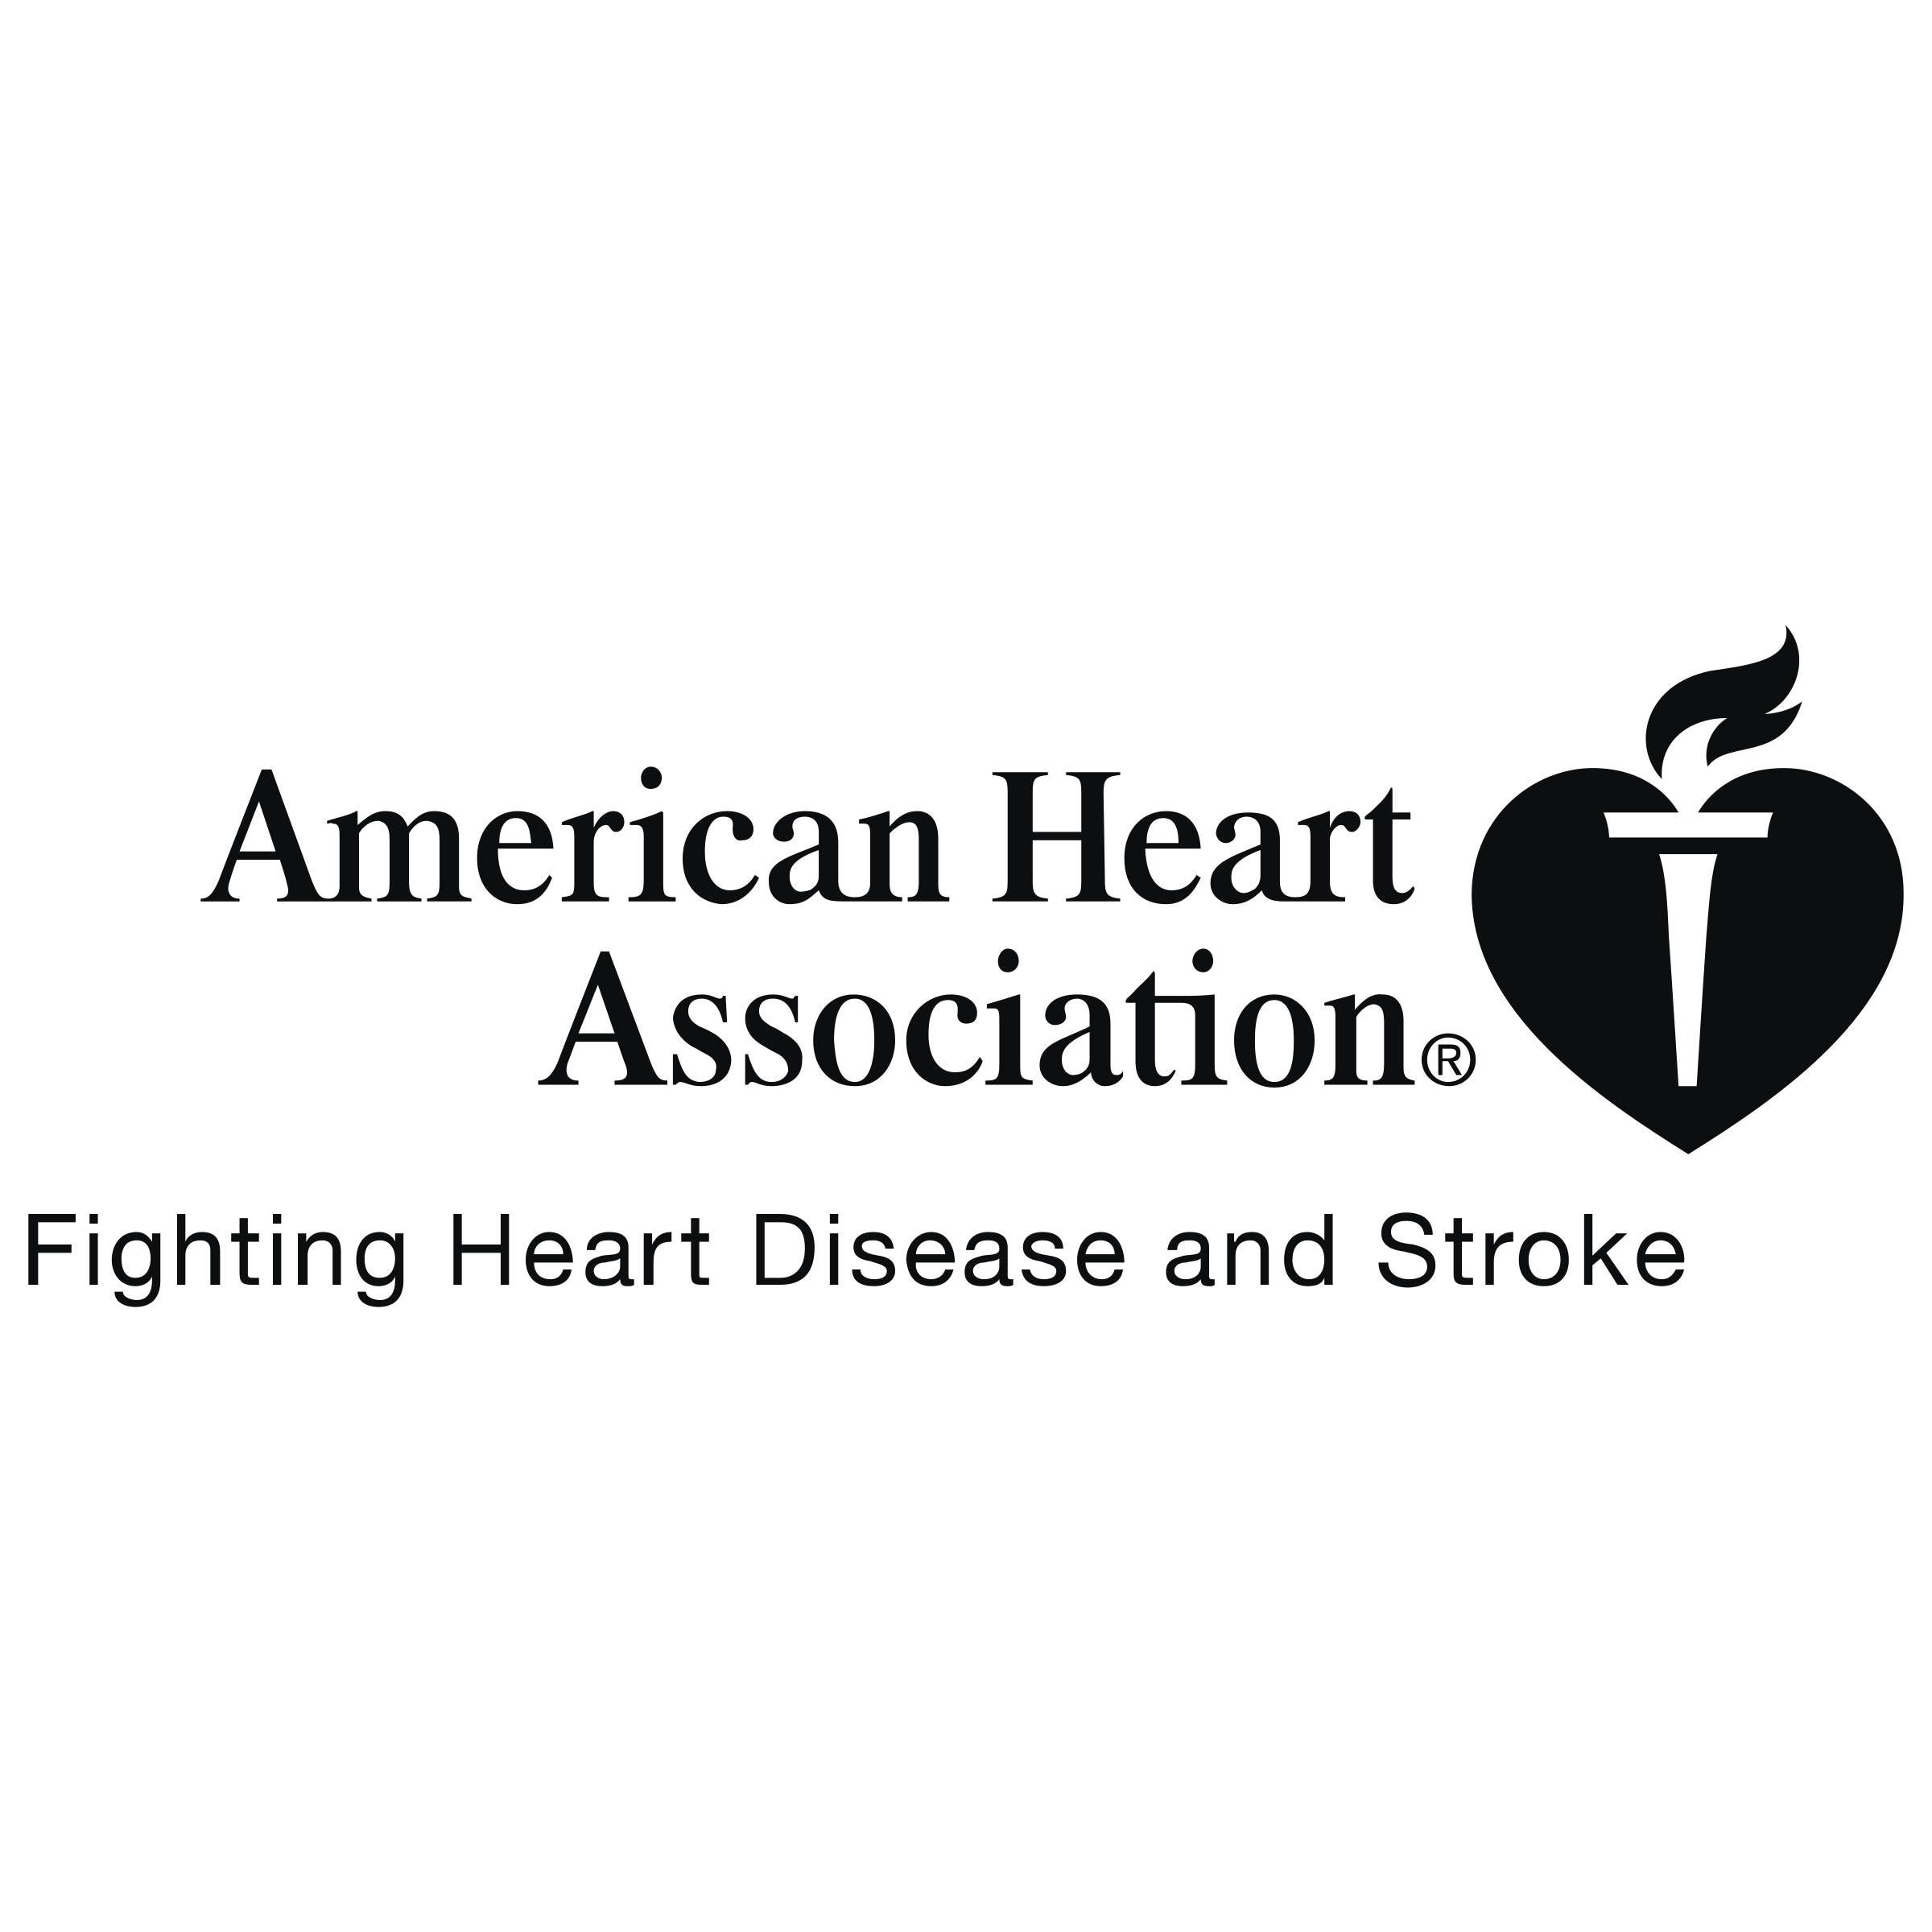 American heart. Американская кардиологическая Ассоциация. American Heart Association logo. Картинка  American Heart Association?. American Heart Association logo PNG.